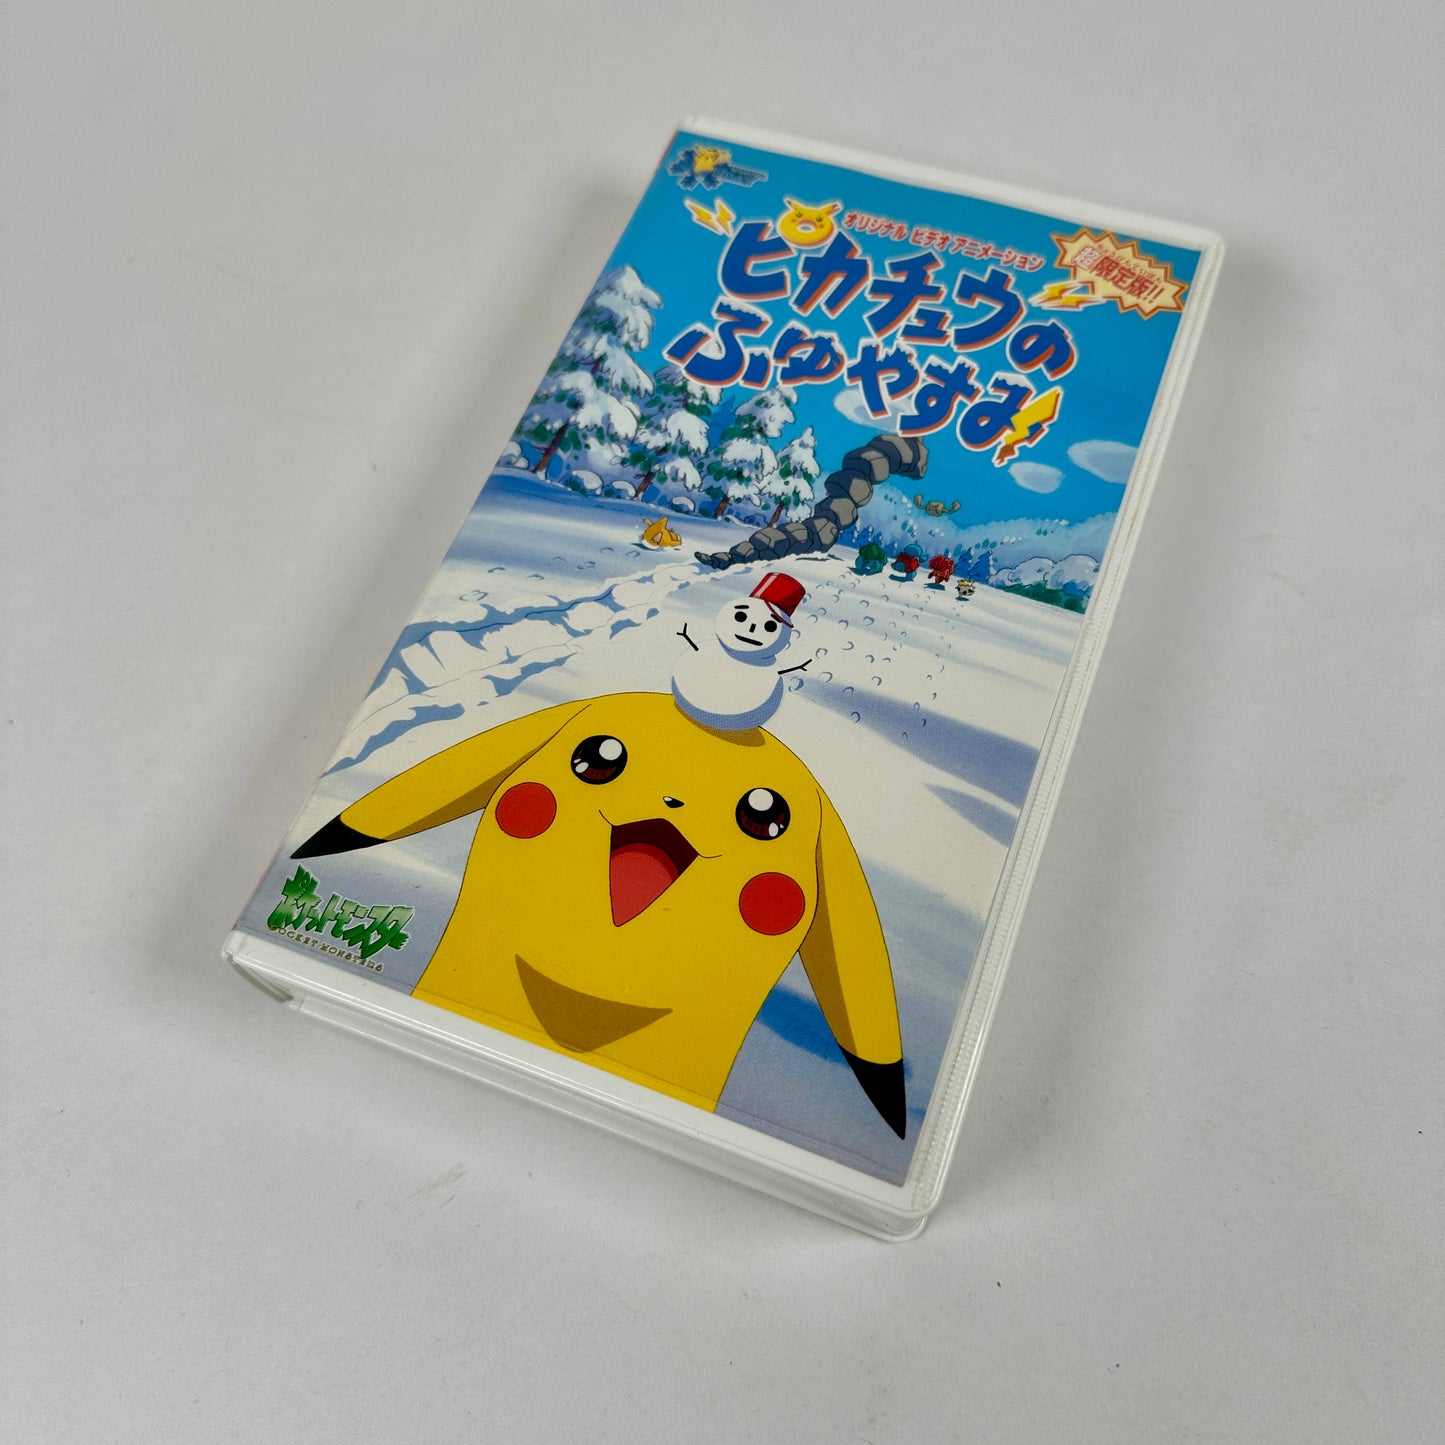 Les Vacances d'hiver de Pikachu